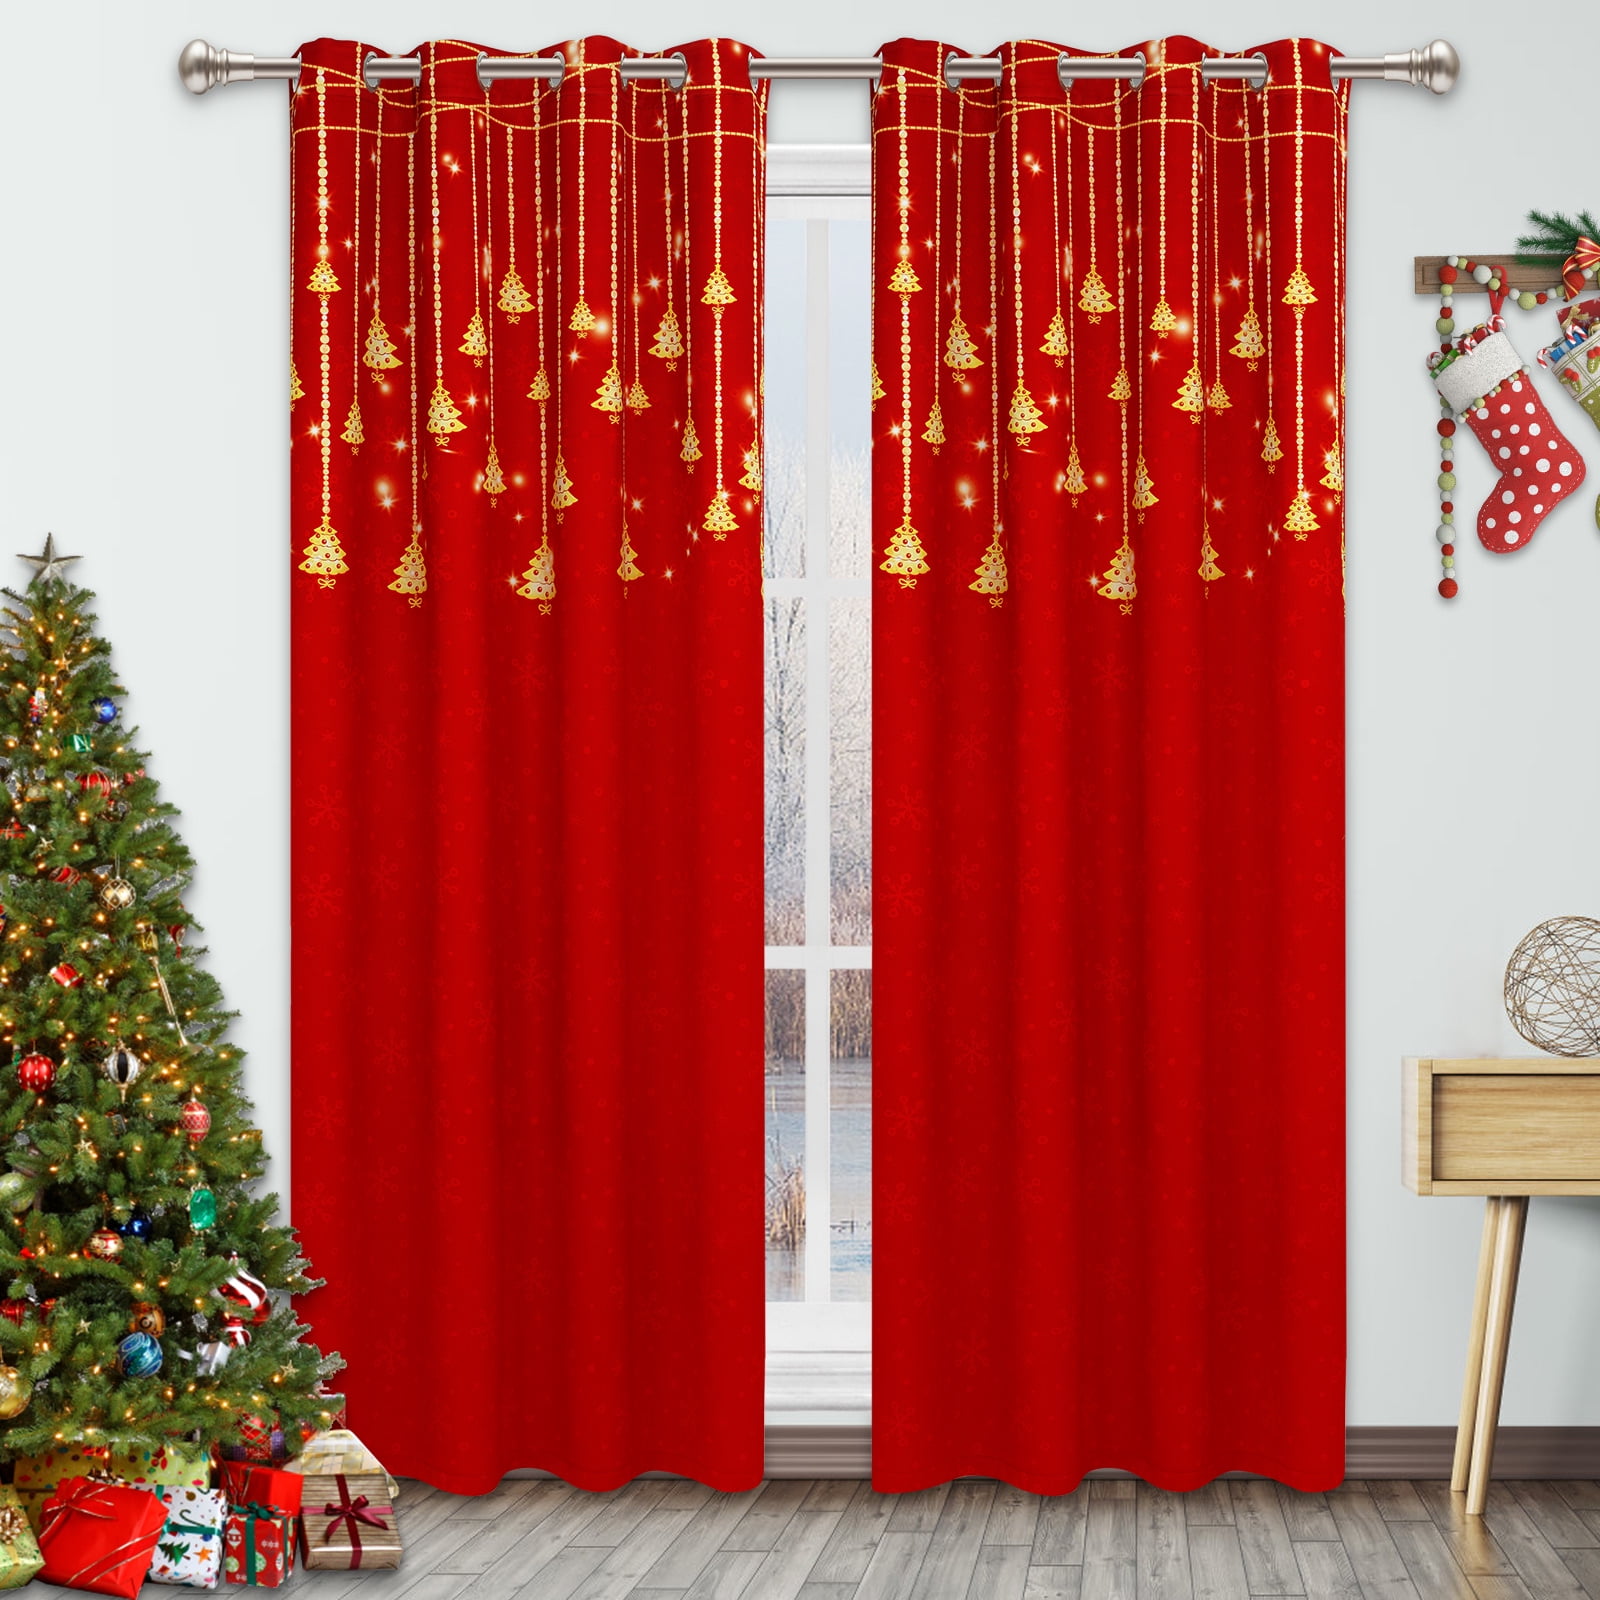 Alishomtll Christmas Curtains for Living Room Blackout Gold Christmas ...